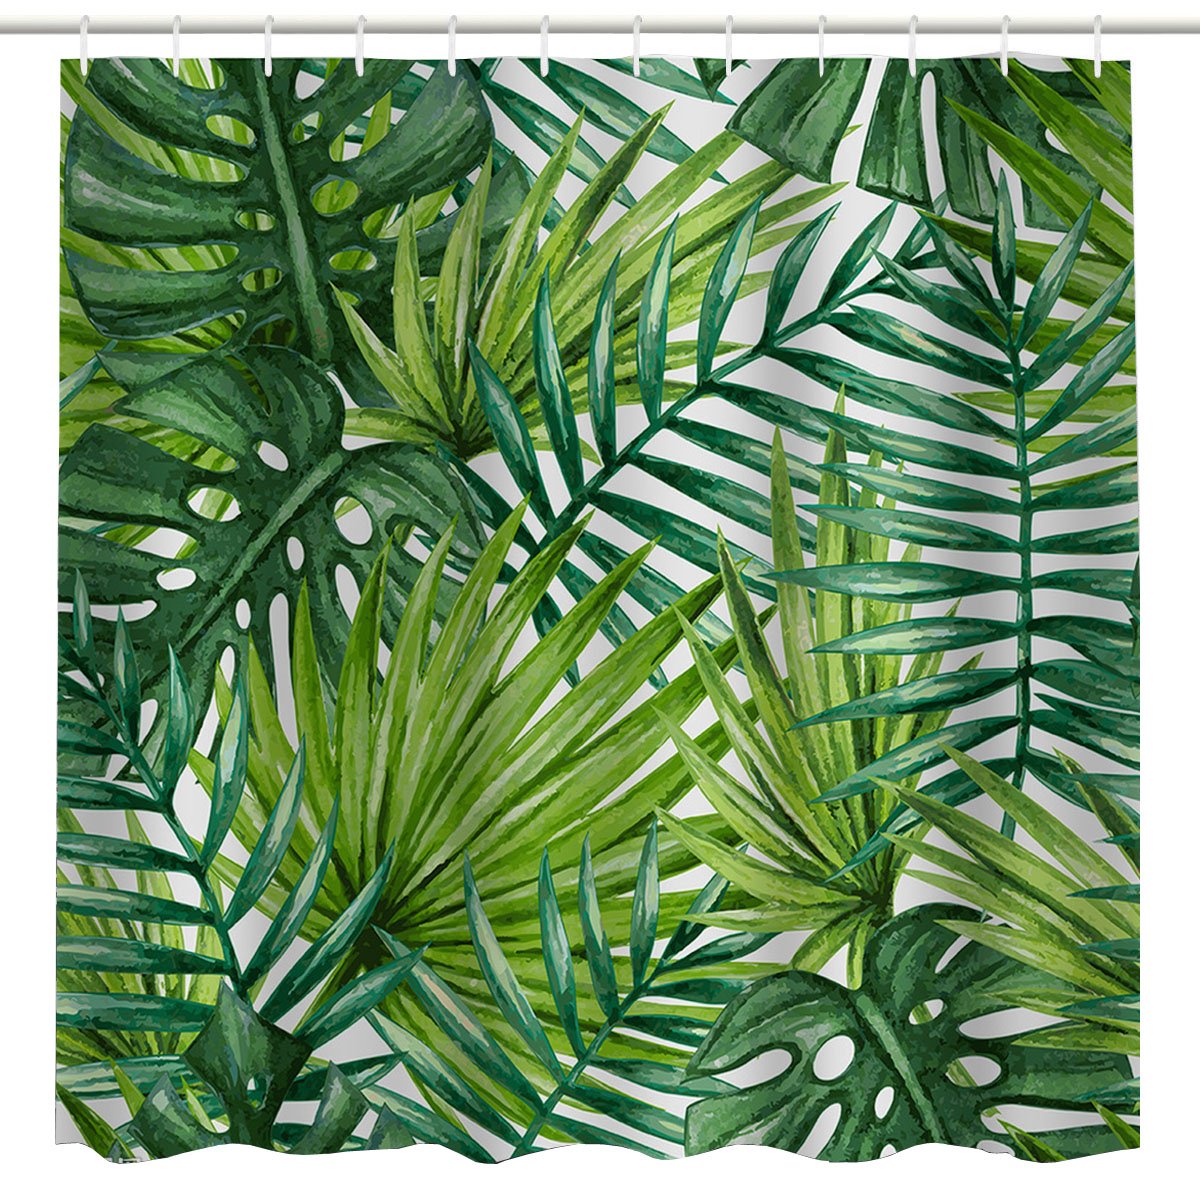 BROSHAN Leaf Print Shower Curtain Fabric Tropical Palm Leaves Pattern Hawaiian Plant Bathroom Decoration Green Natural Waterproof Fabric Bathroom Accessory with Hooks,